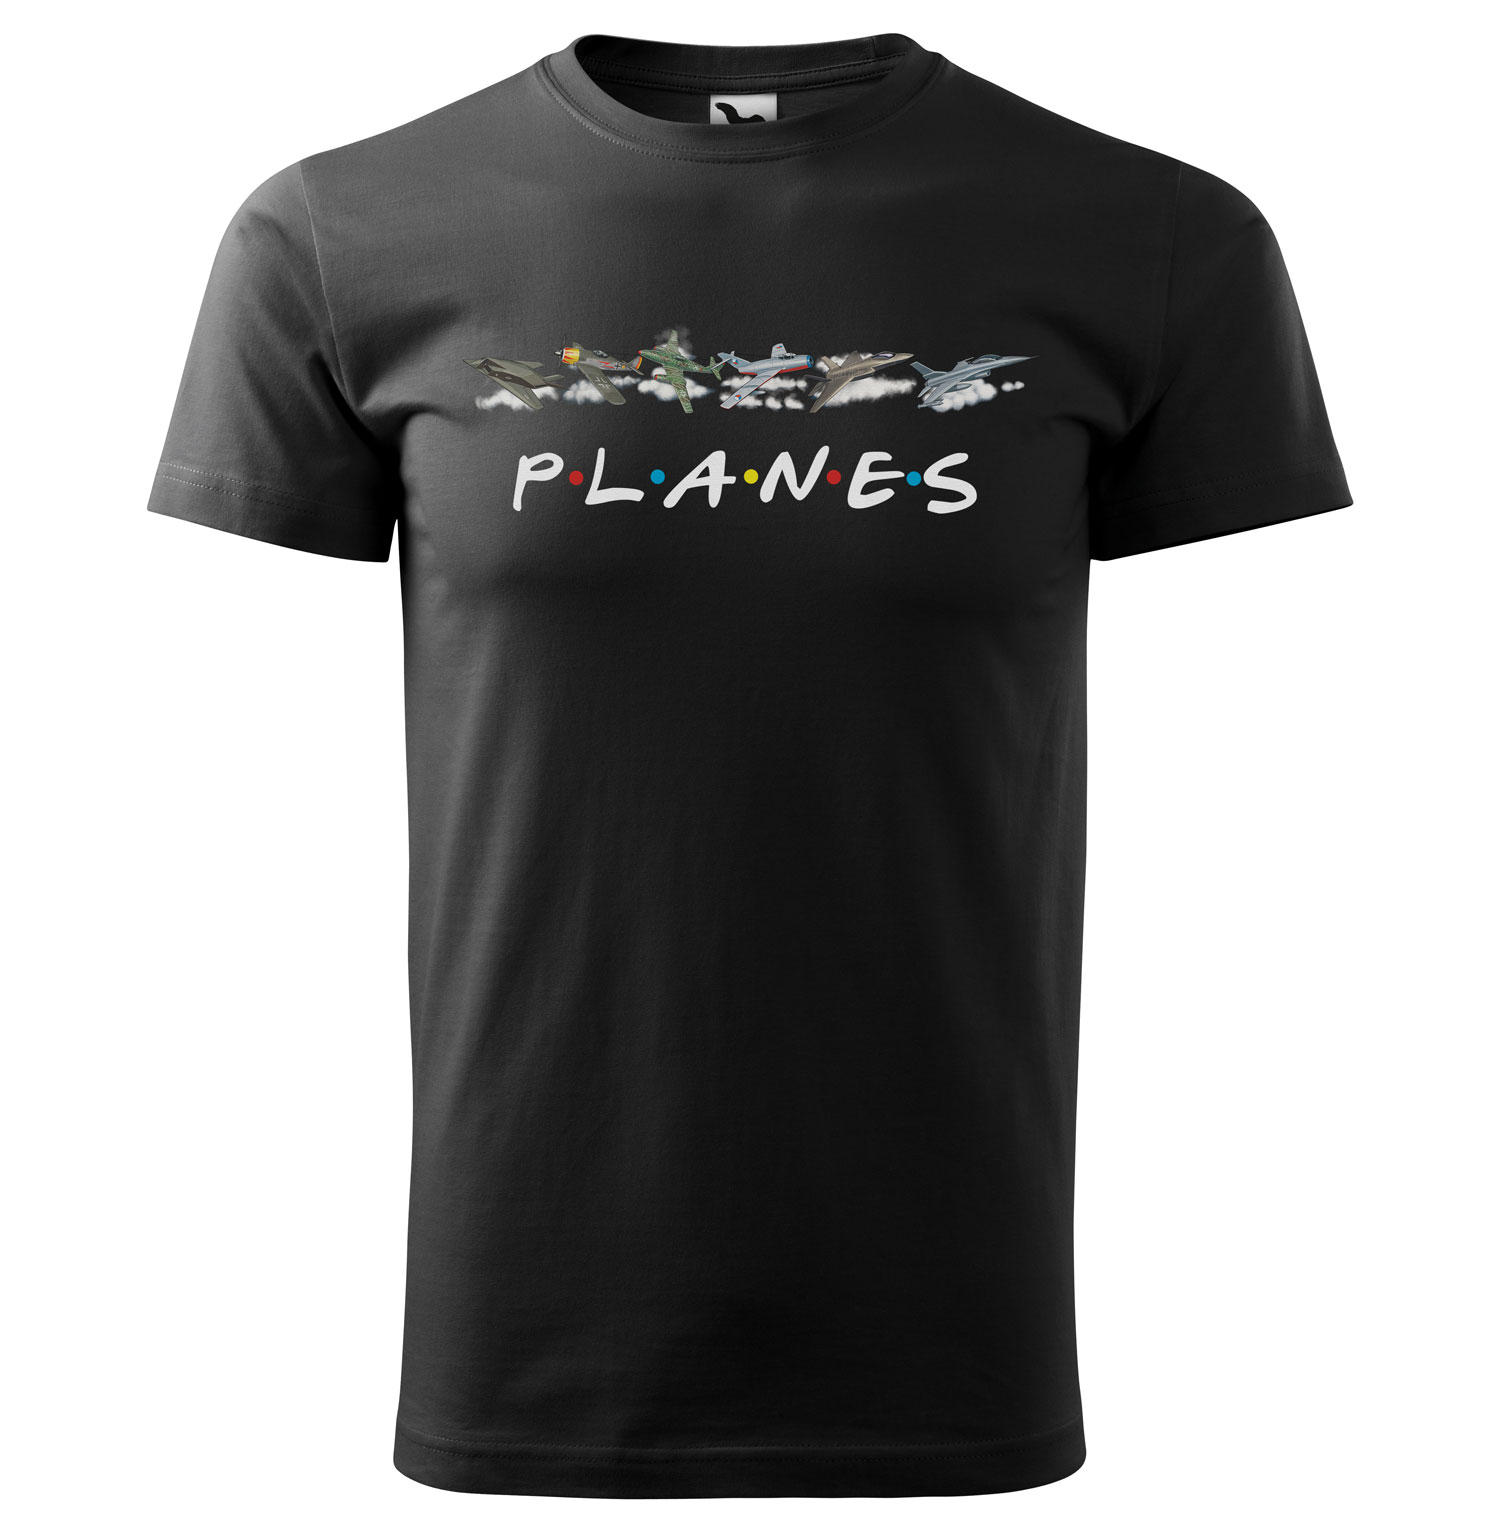 Tričko Planes (Velikost: M, Typ: pro muže, Barva trička: Černá)